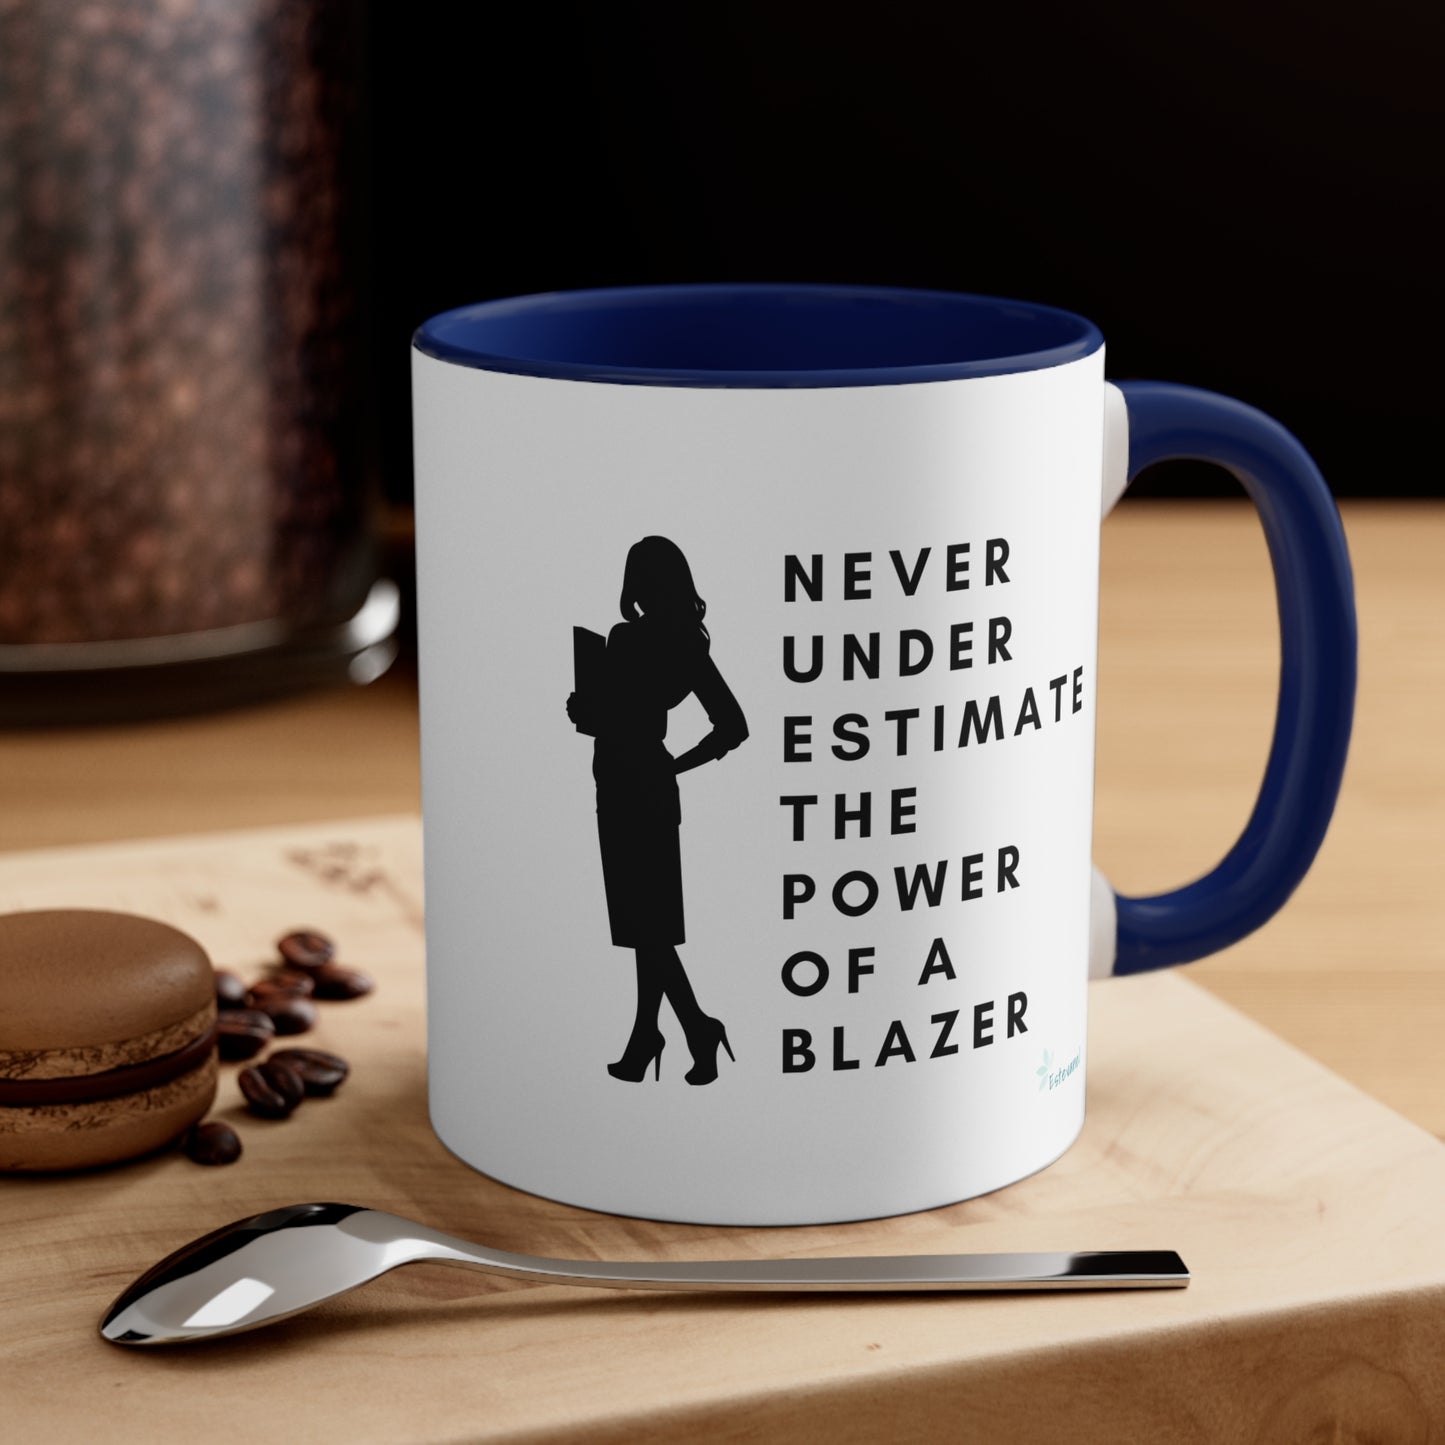 The Power of A Blazer Accent Coffee Mug, 11oz